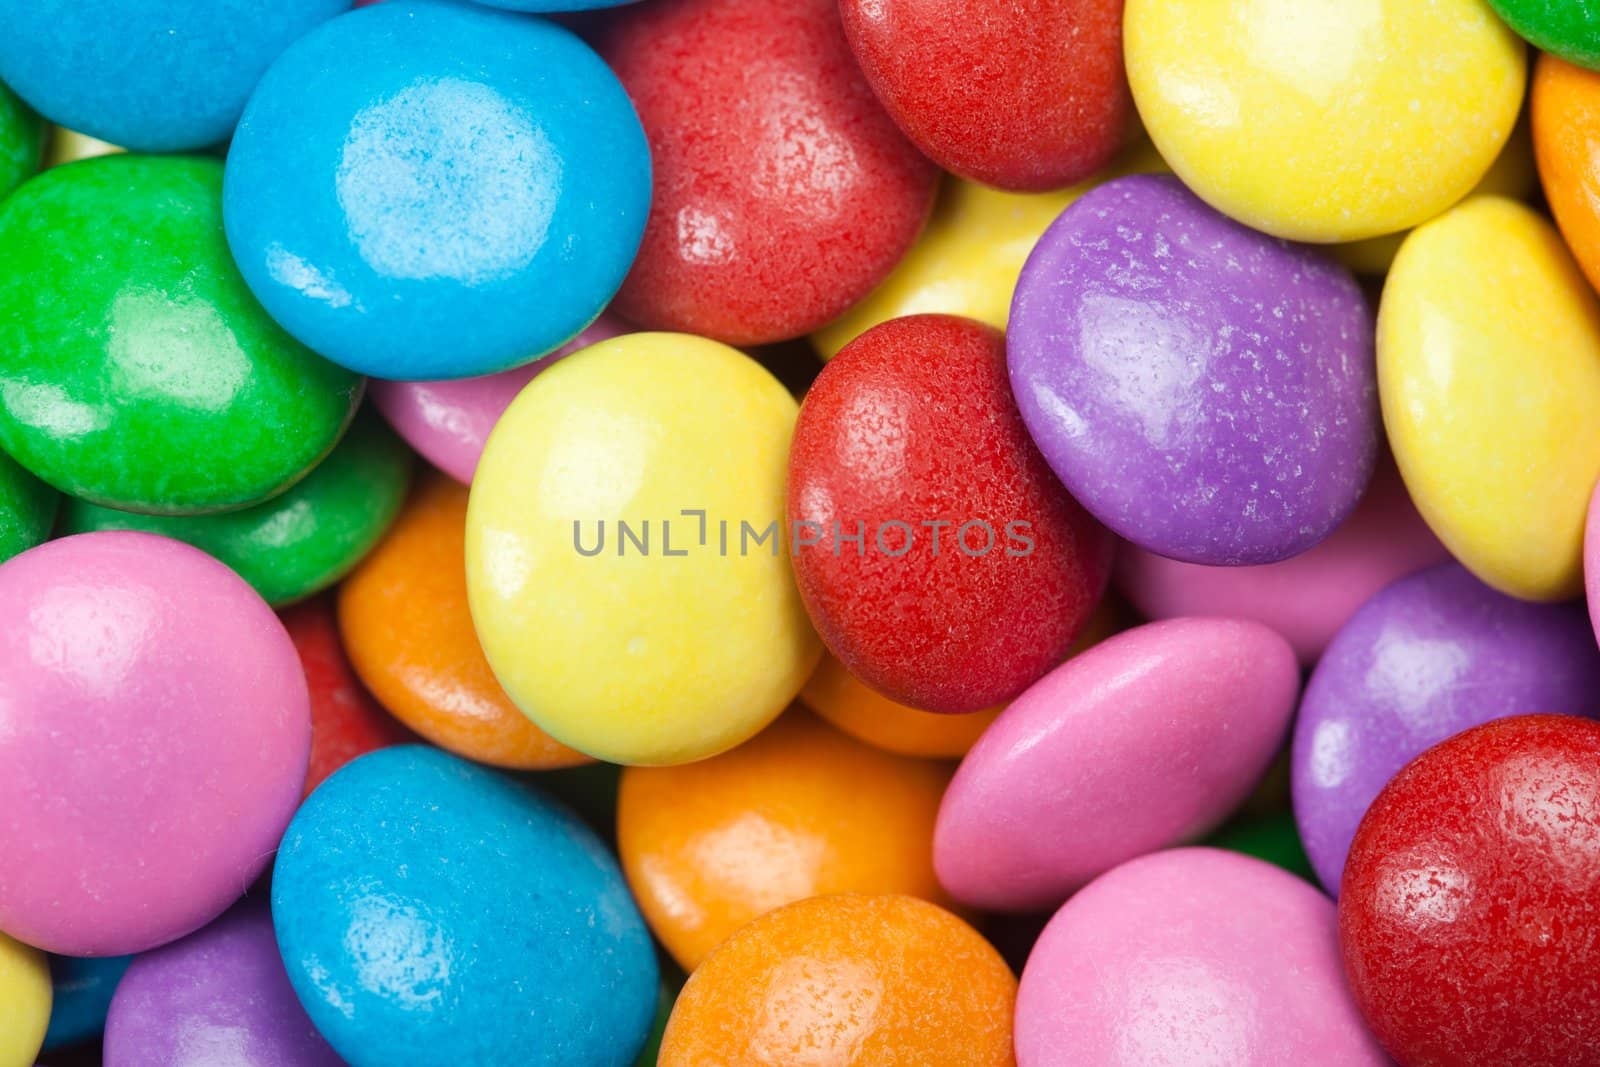 Colorful Chocolate Candy by Daniel_Wiedemann